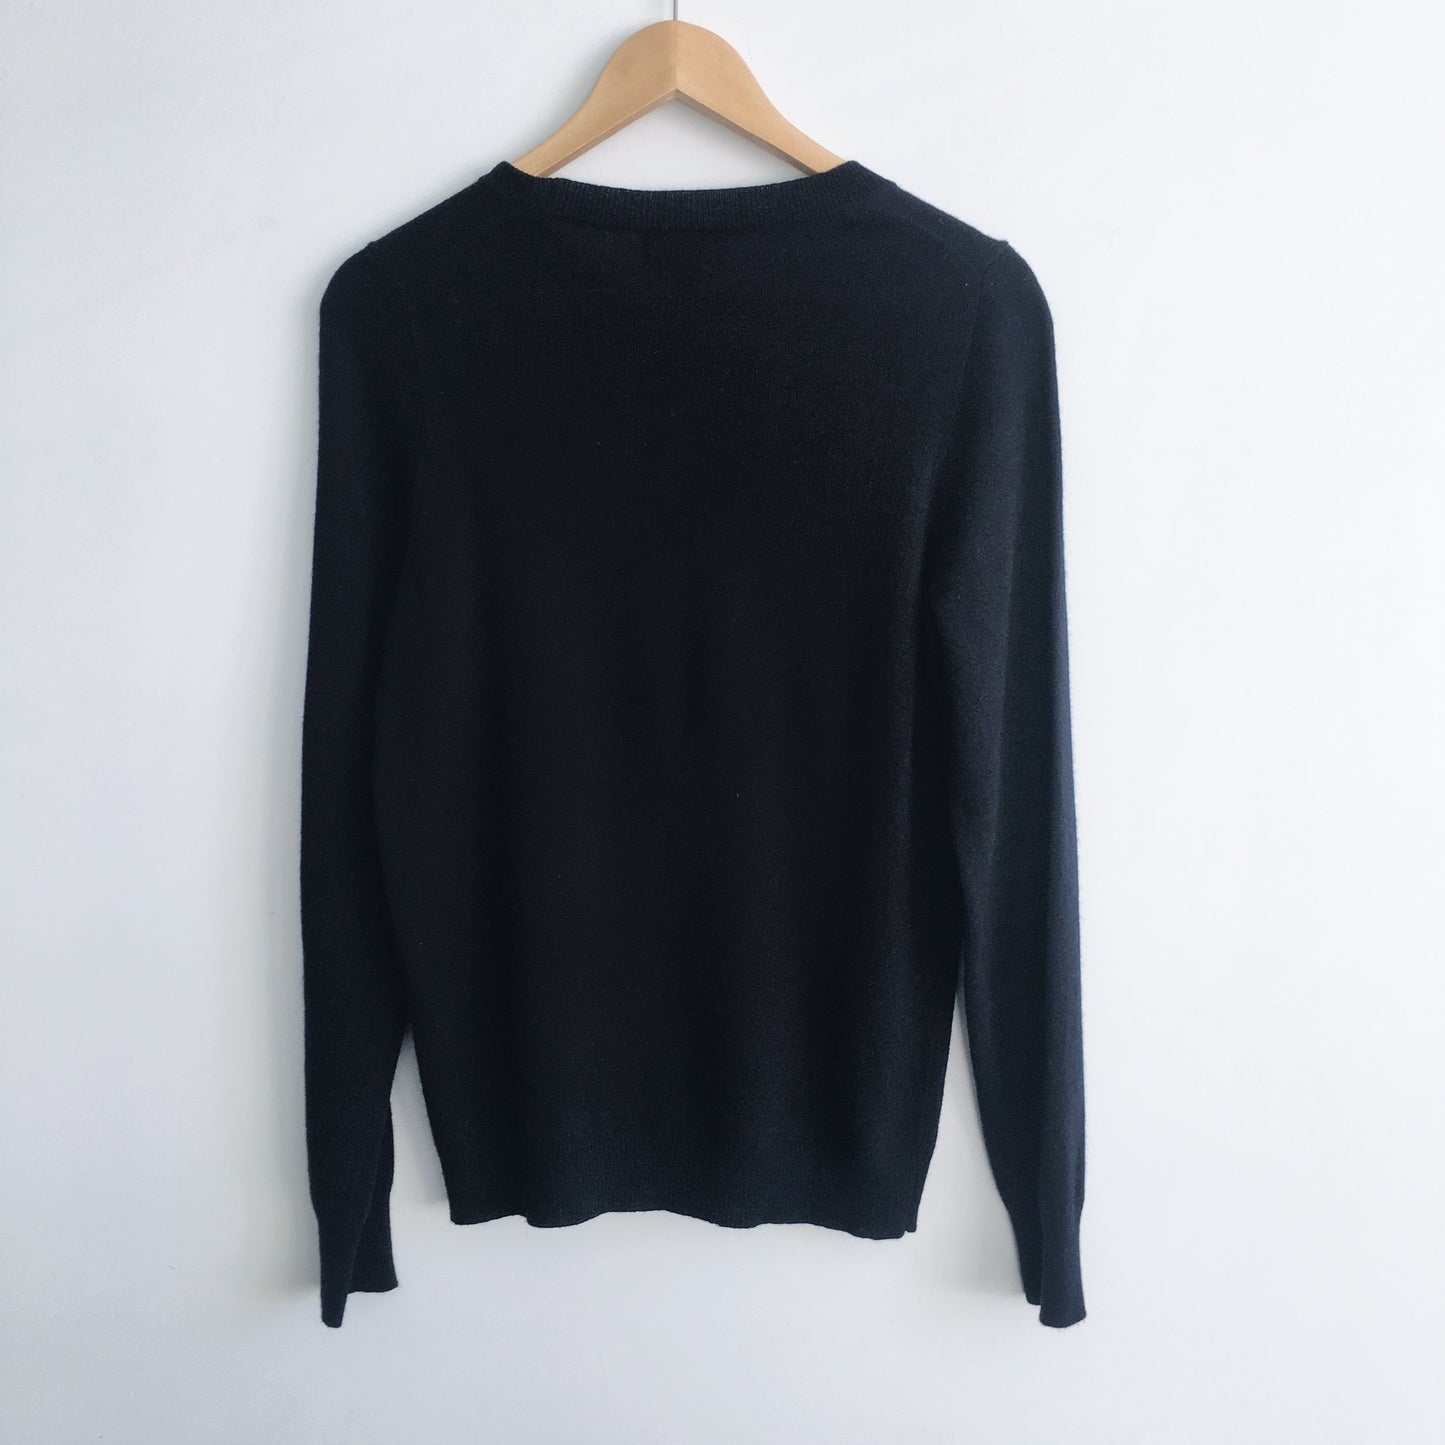 J Crew French Hen Sweater - size Medium